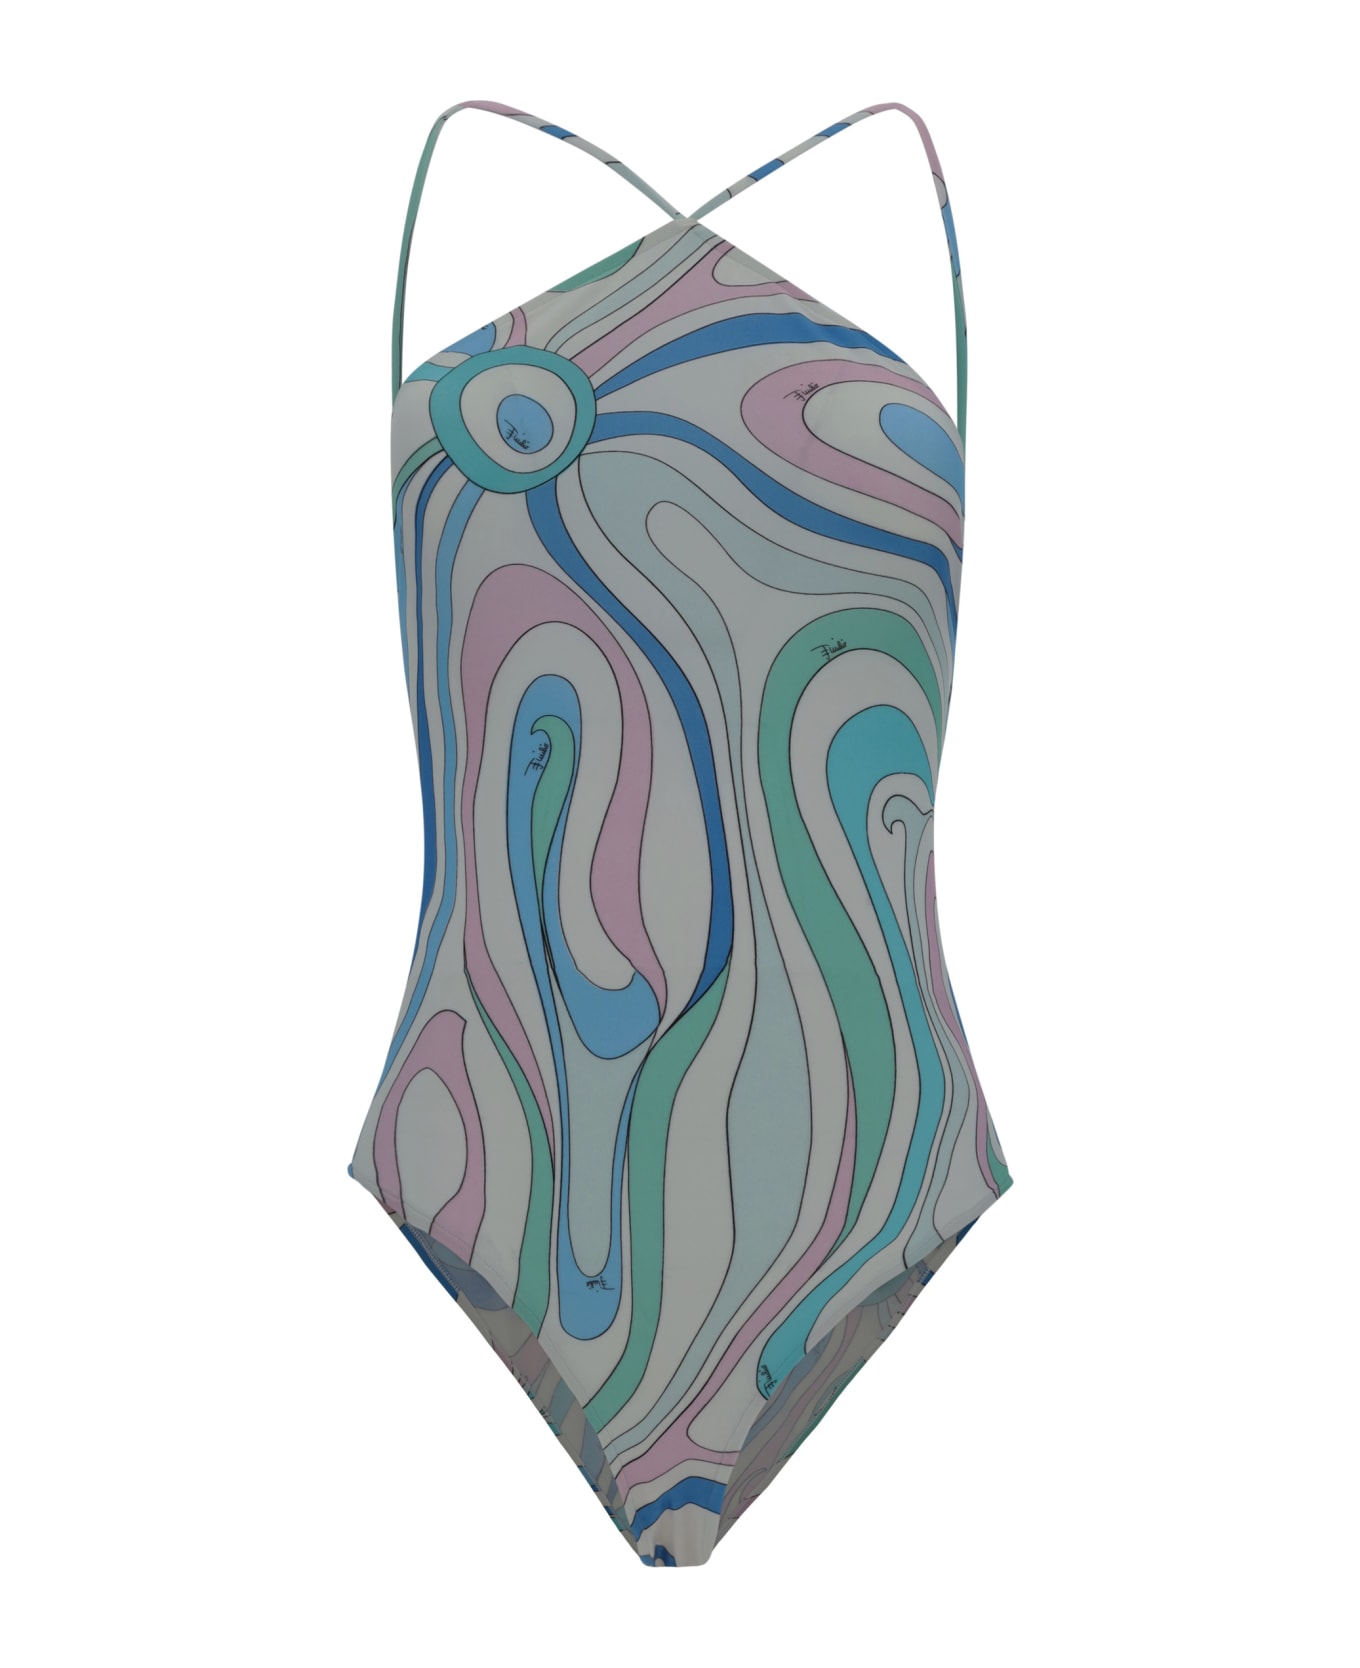 Pucci Vivara Swimsuit - 051